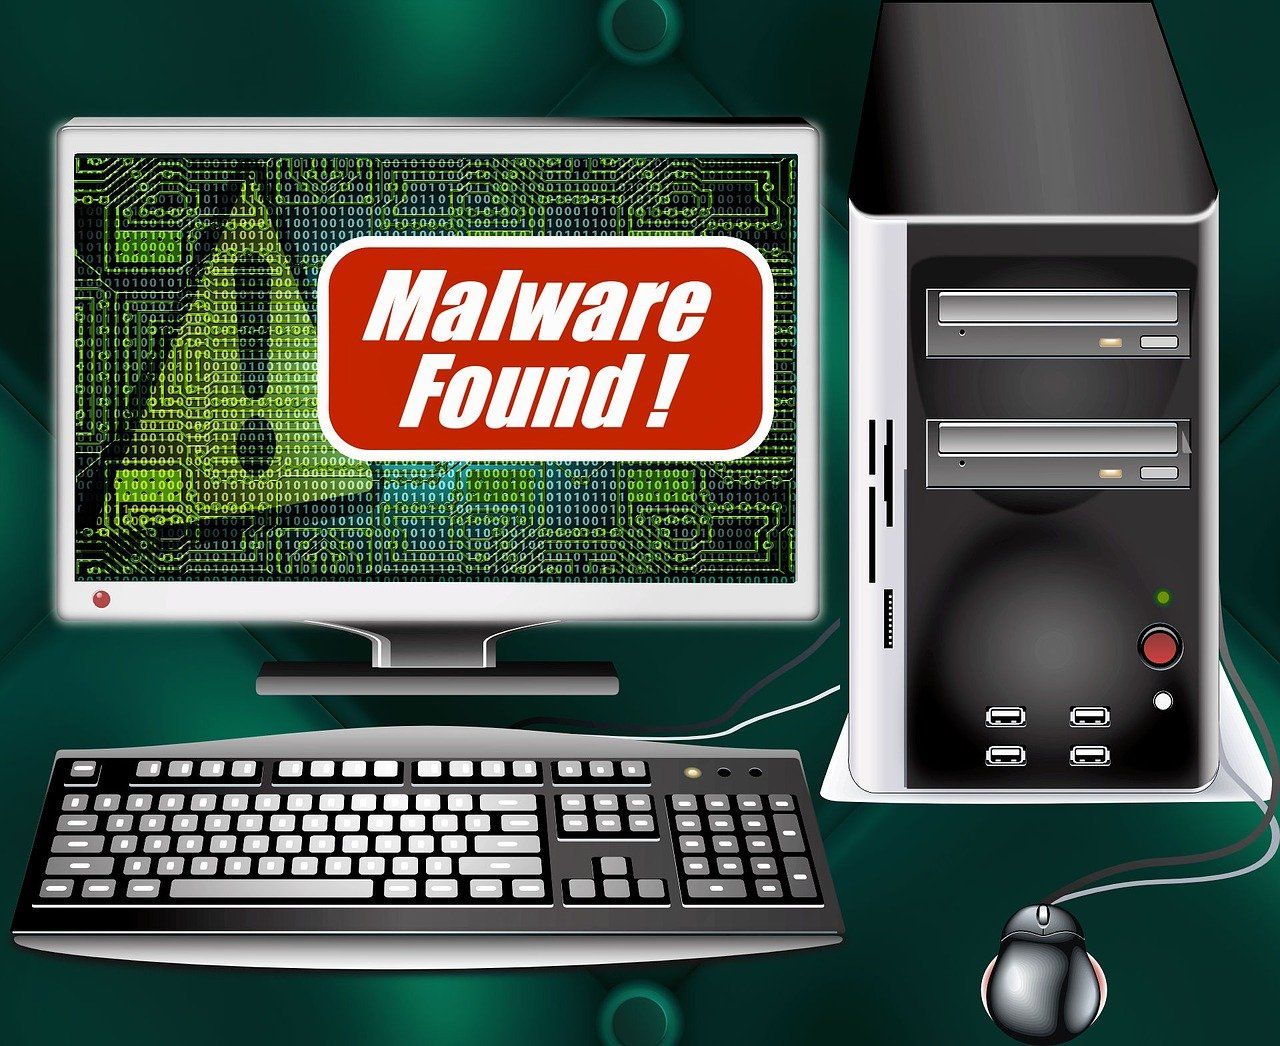 Malware found notice on a desktop screen